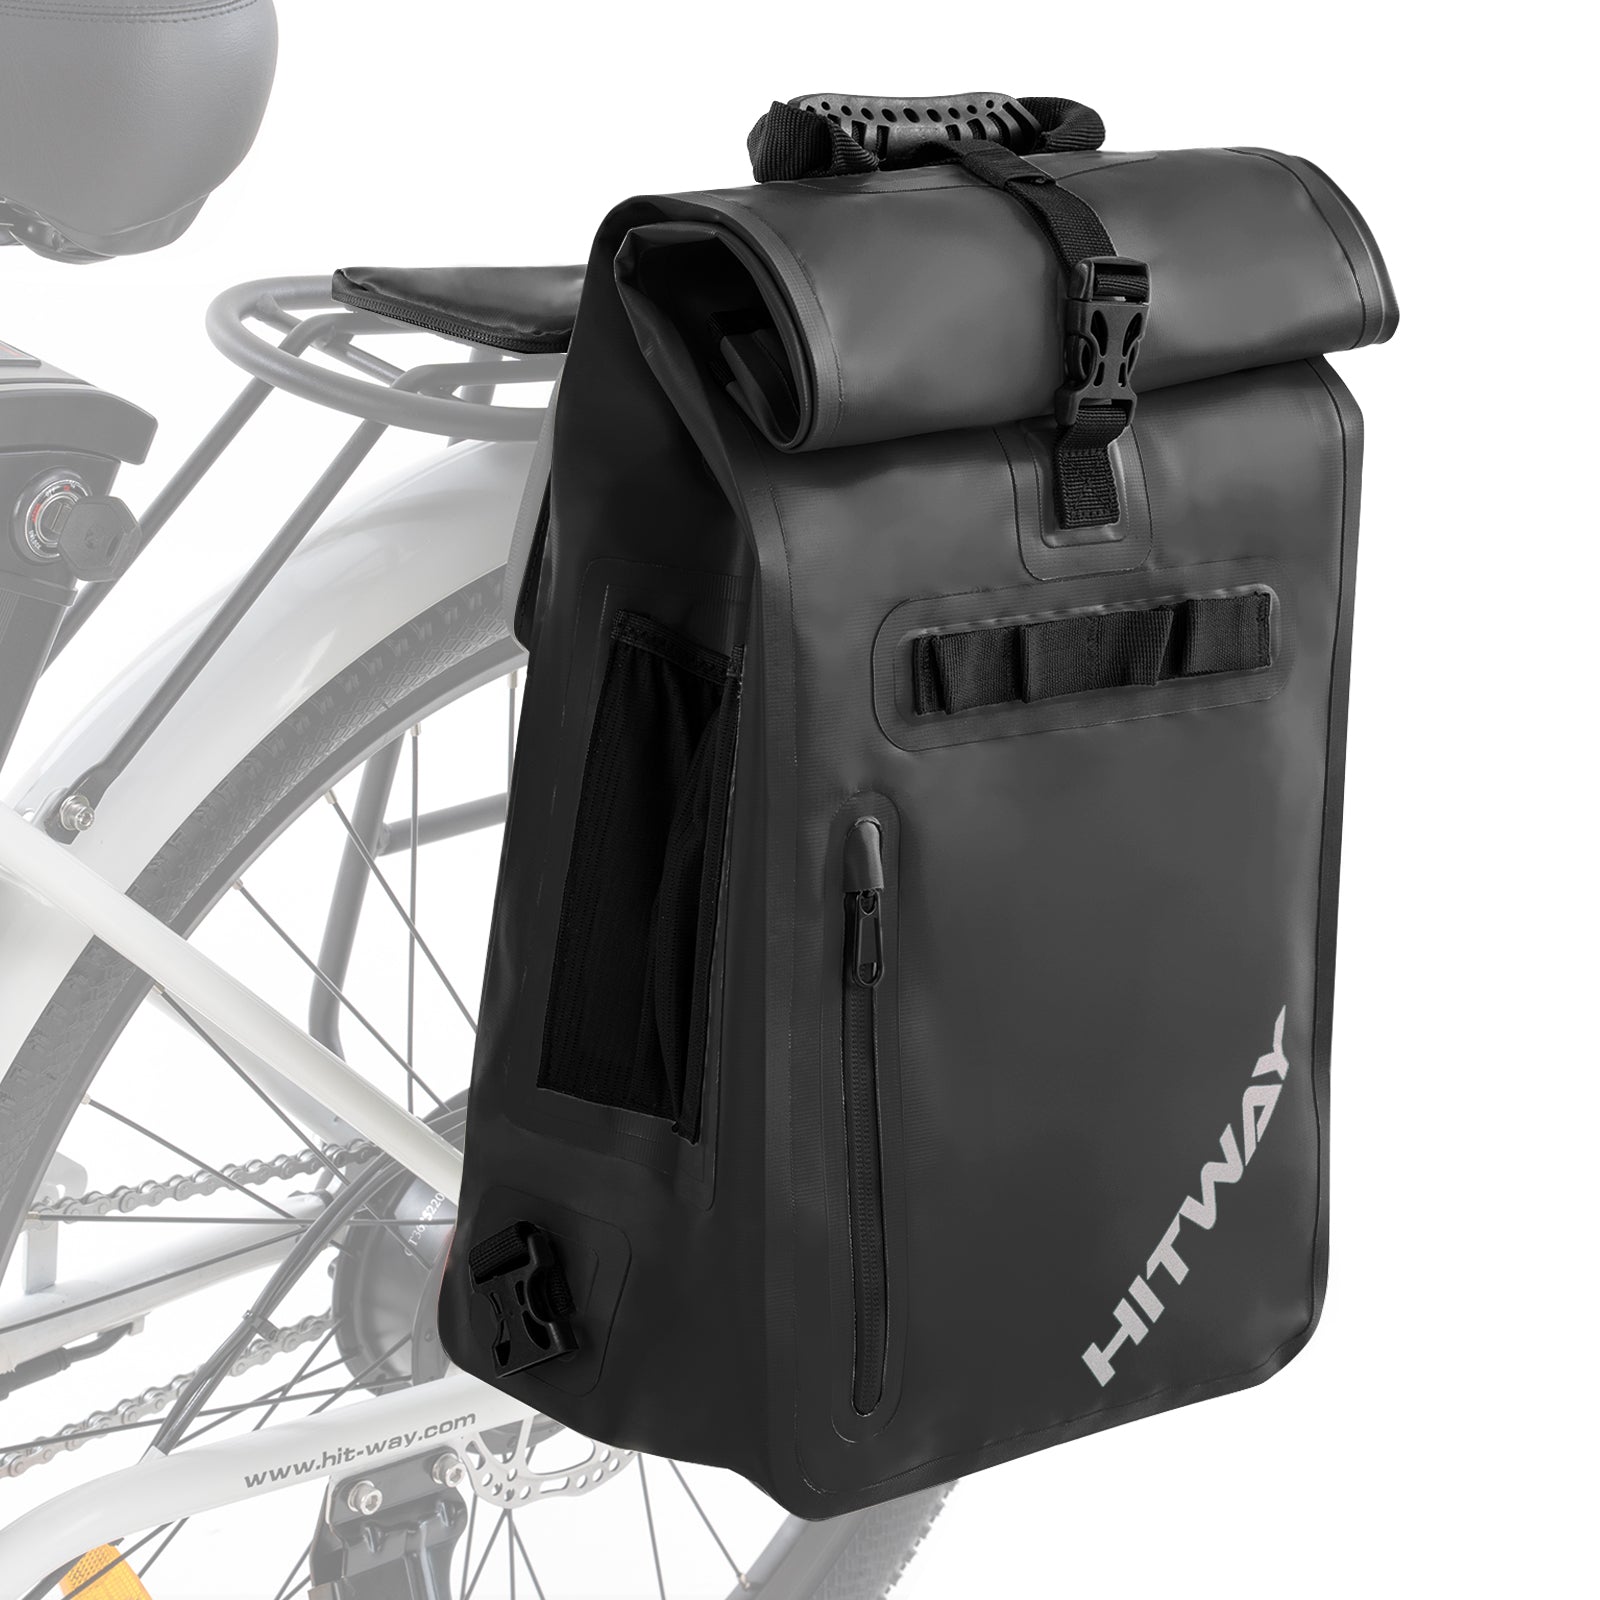 HITWAY 3 in 1 Bike Bag Waterproof Bike Pannier Bag | HITWAY Ebike